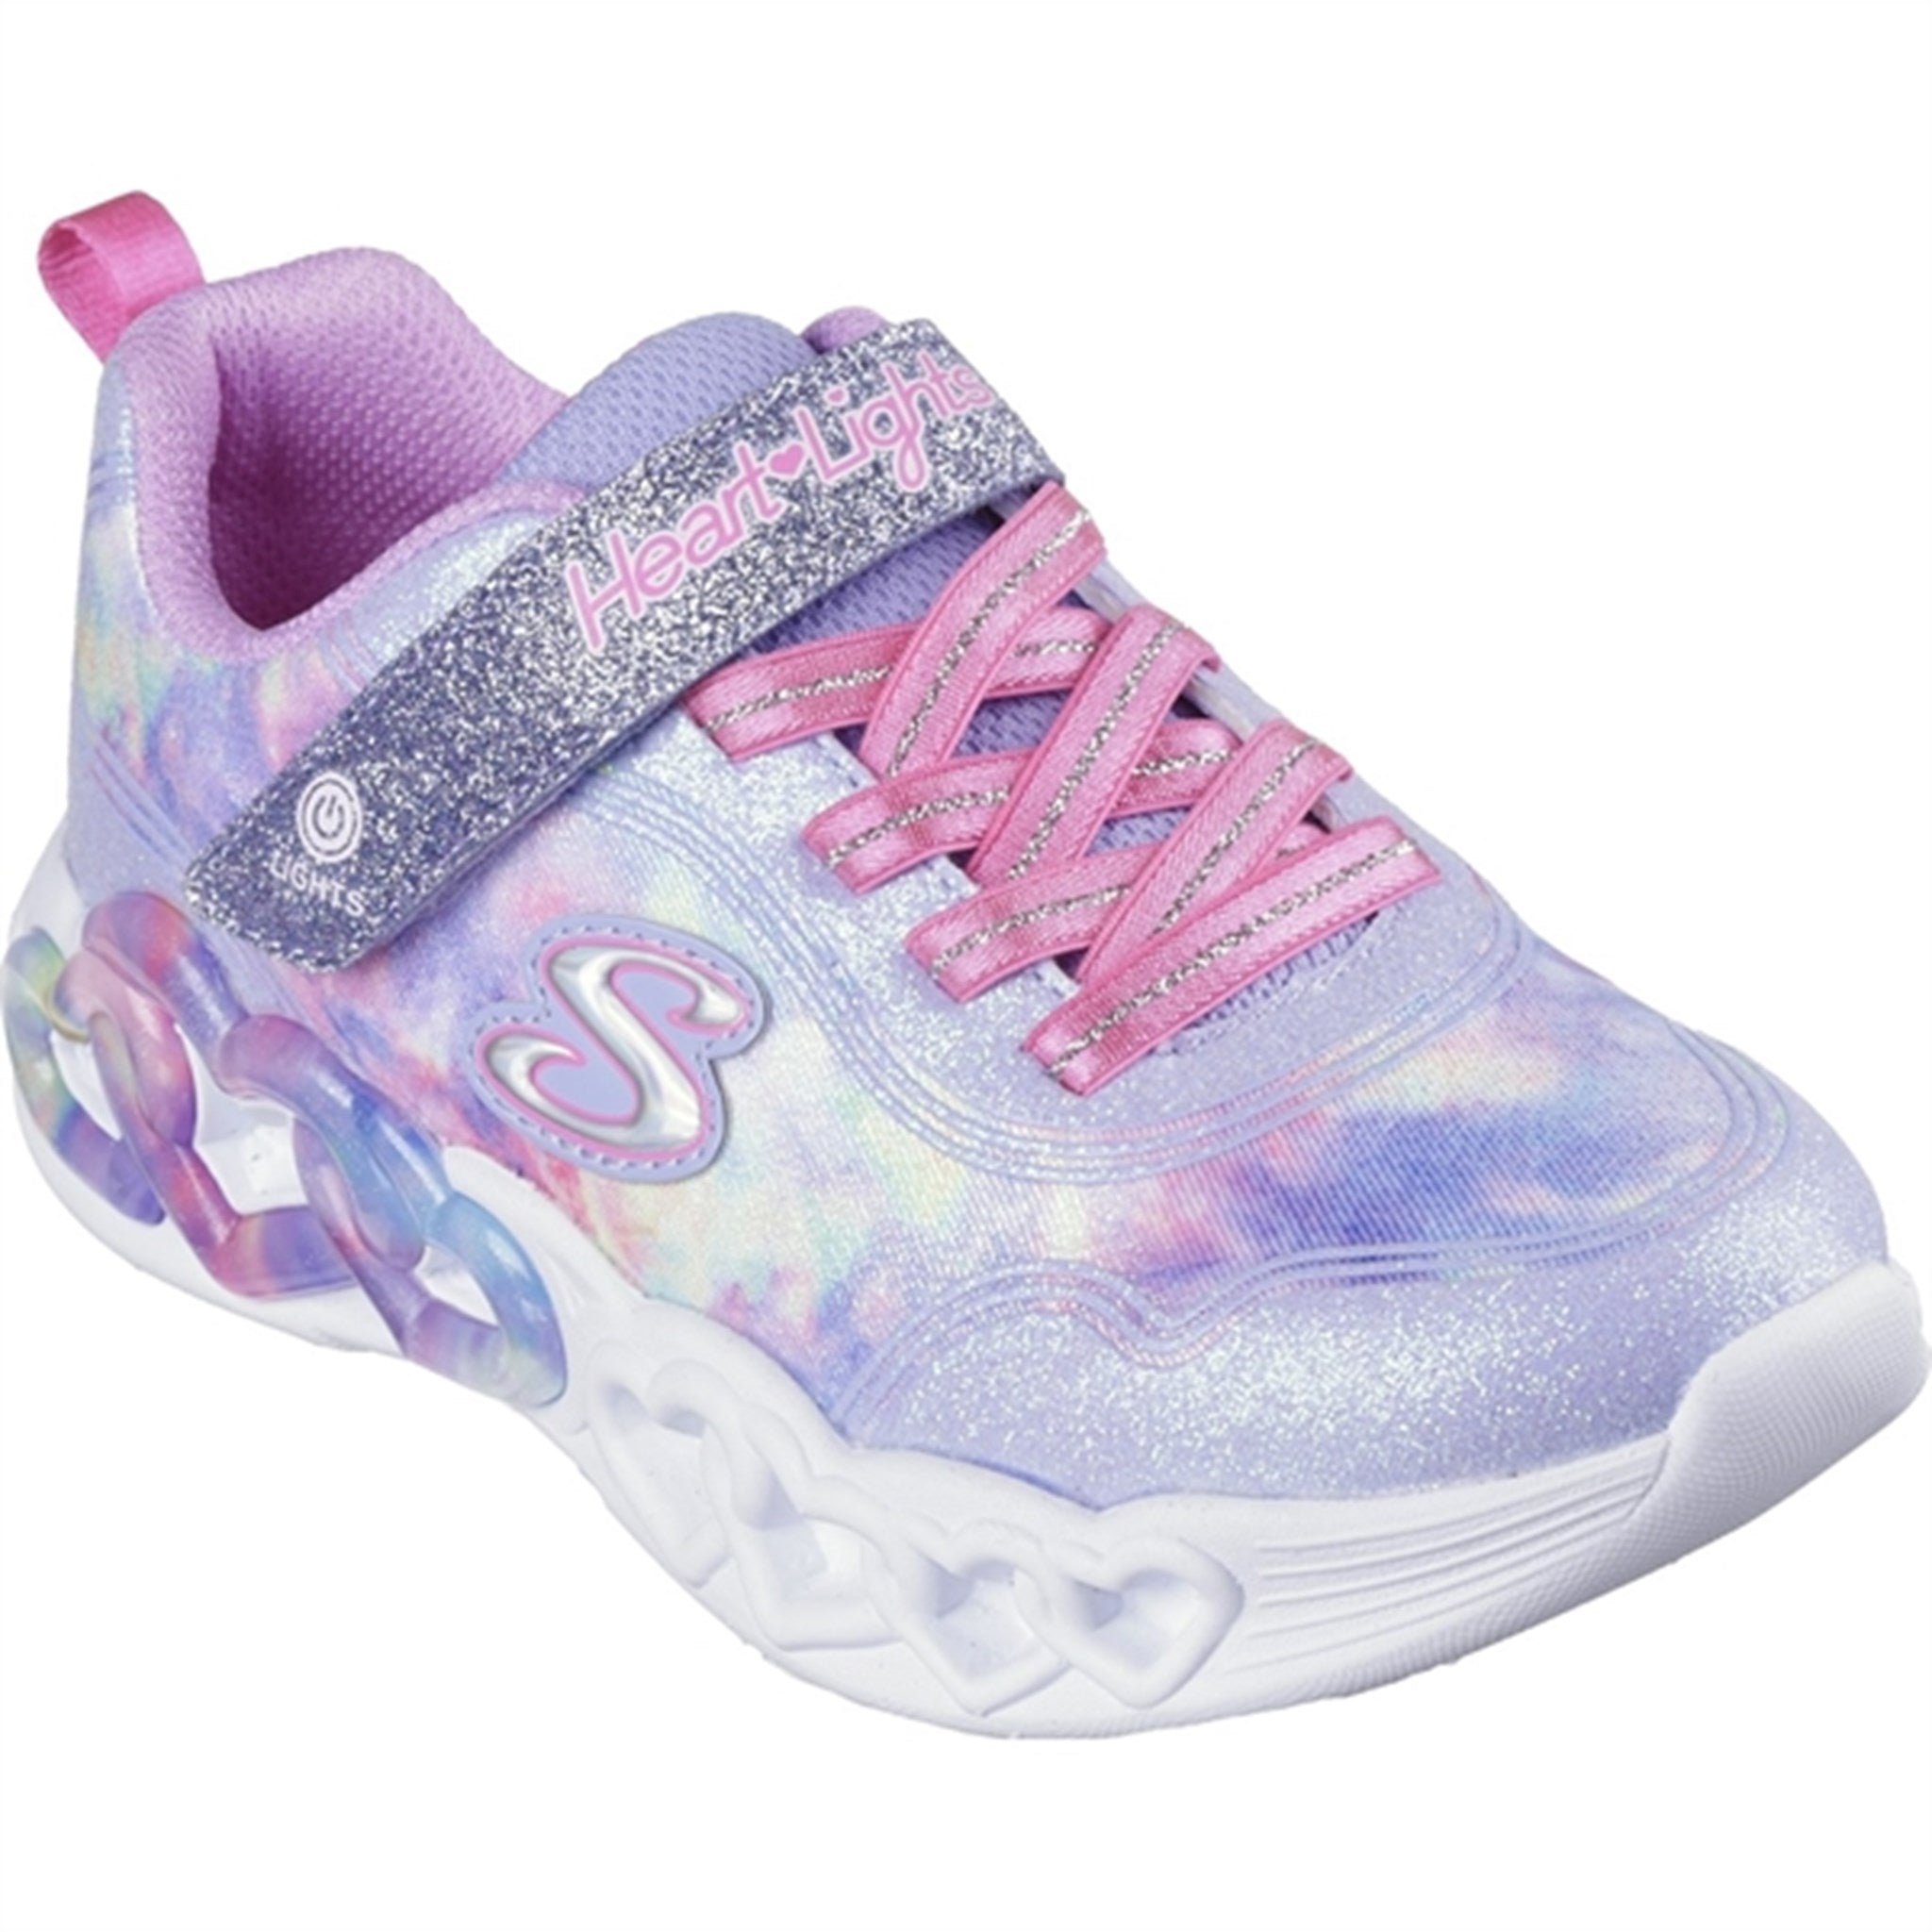 Skechers Infinite Heart Lights Cloud Dye Print Sneakers Lavender Multicolor